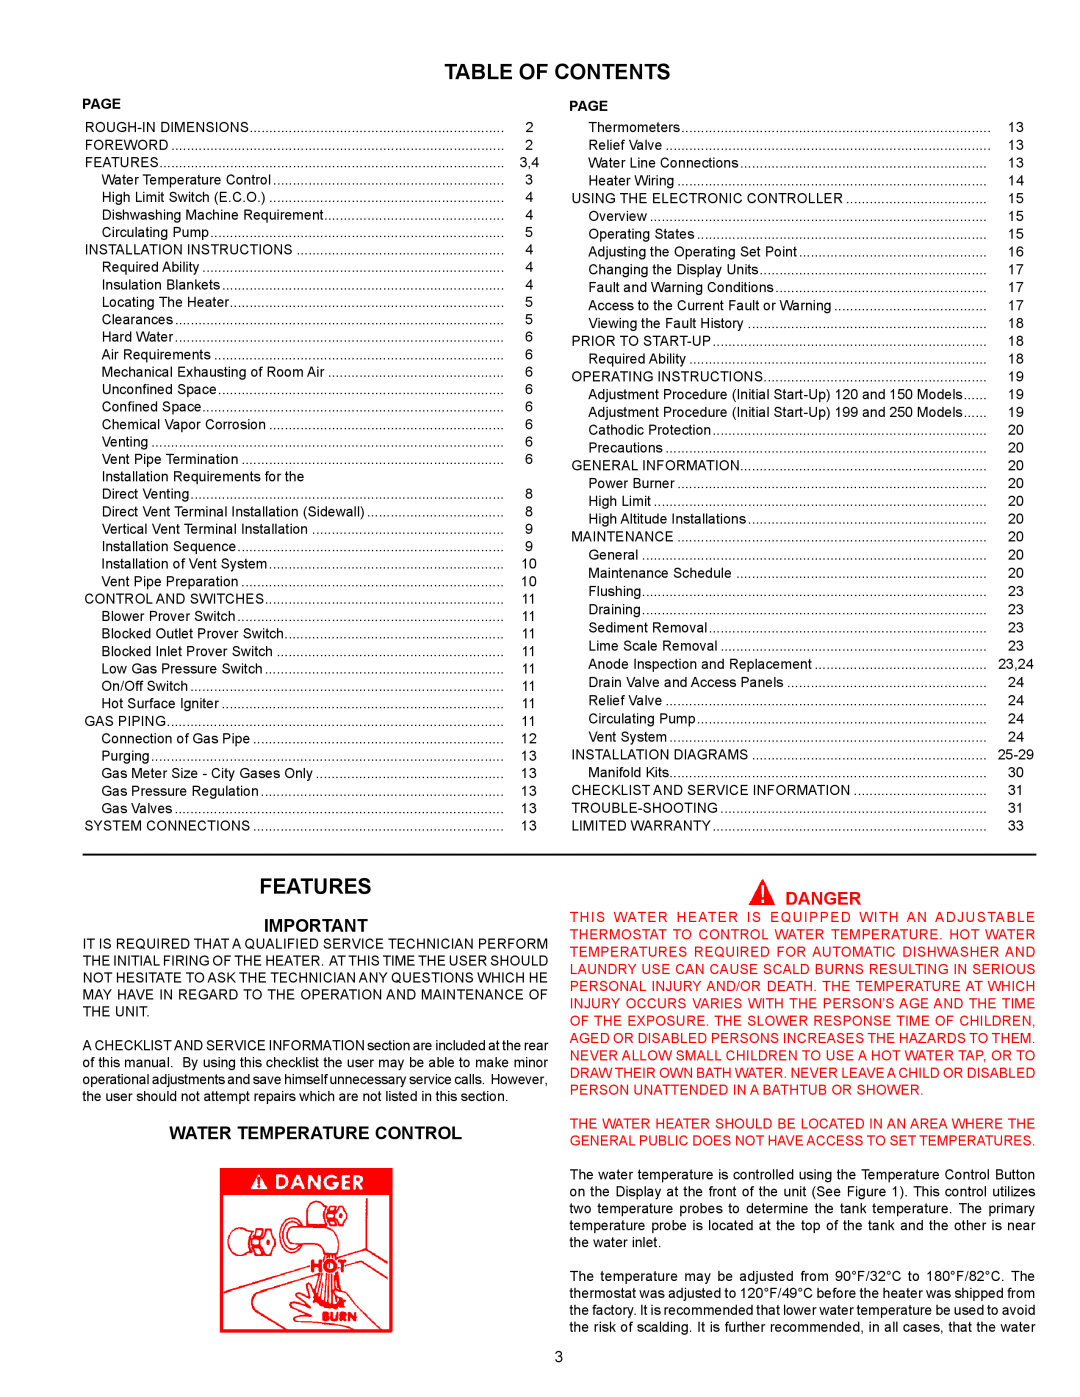 Ferguson JWSH100150, JWSH100250 warranty Table Of Contents, Features, Water Temperature Control, Danger, Page 